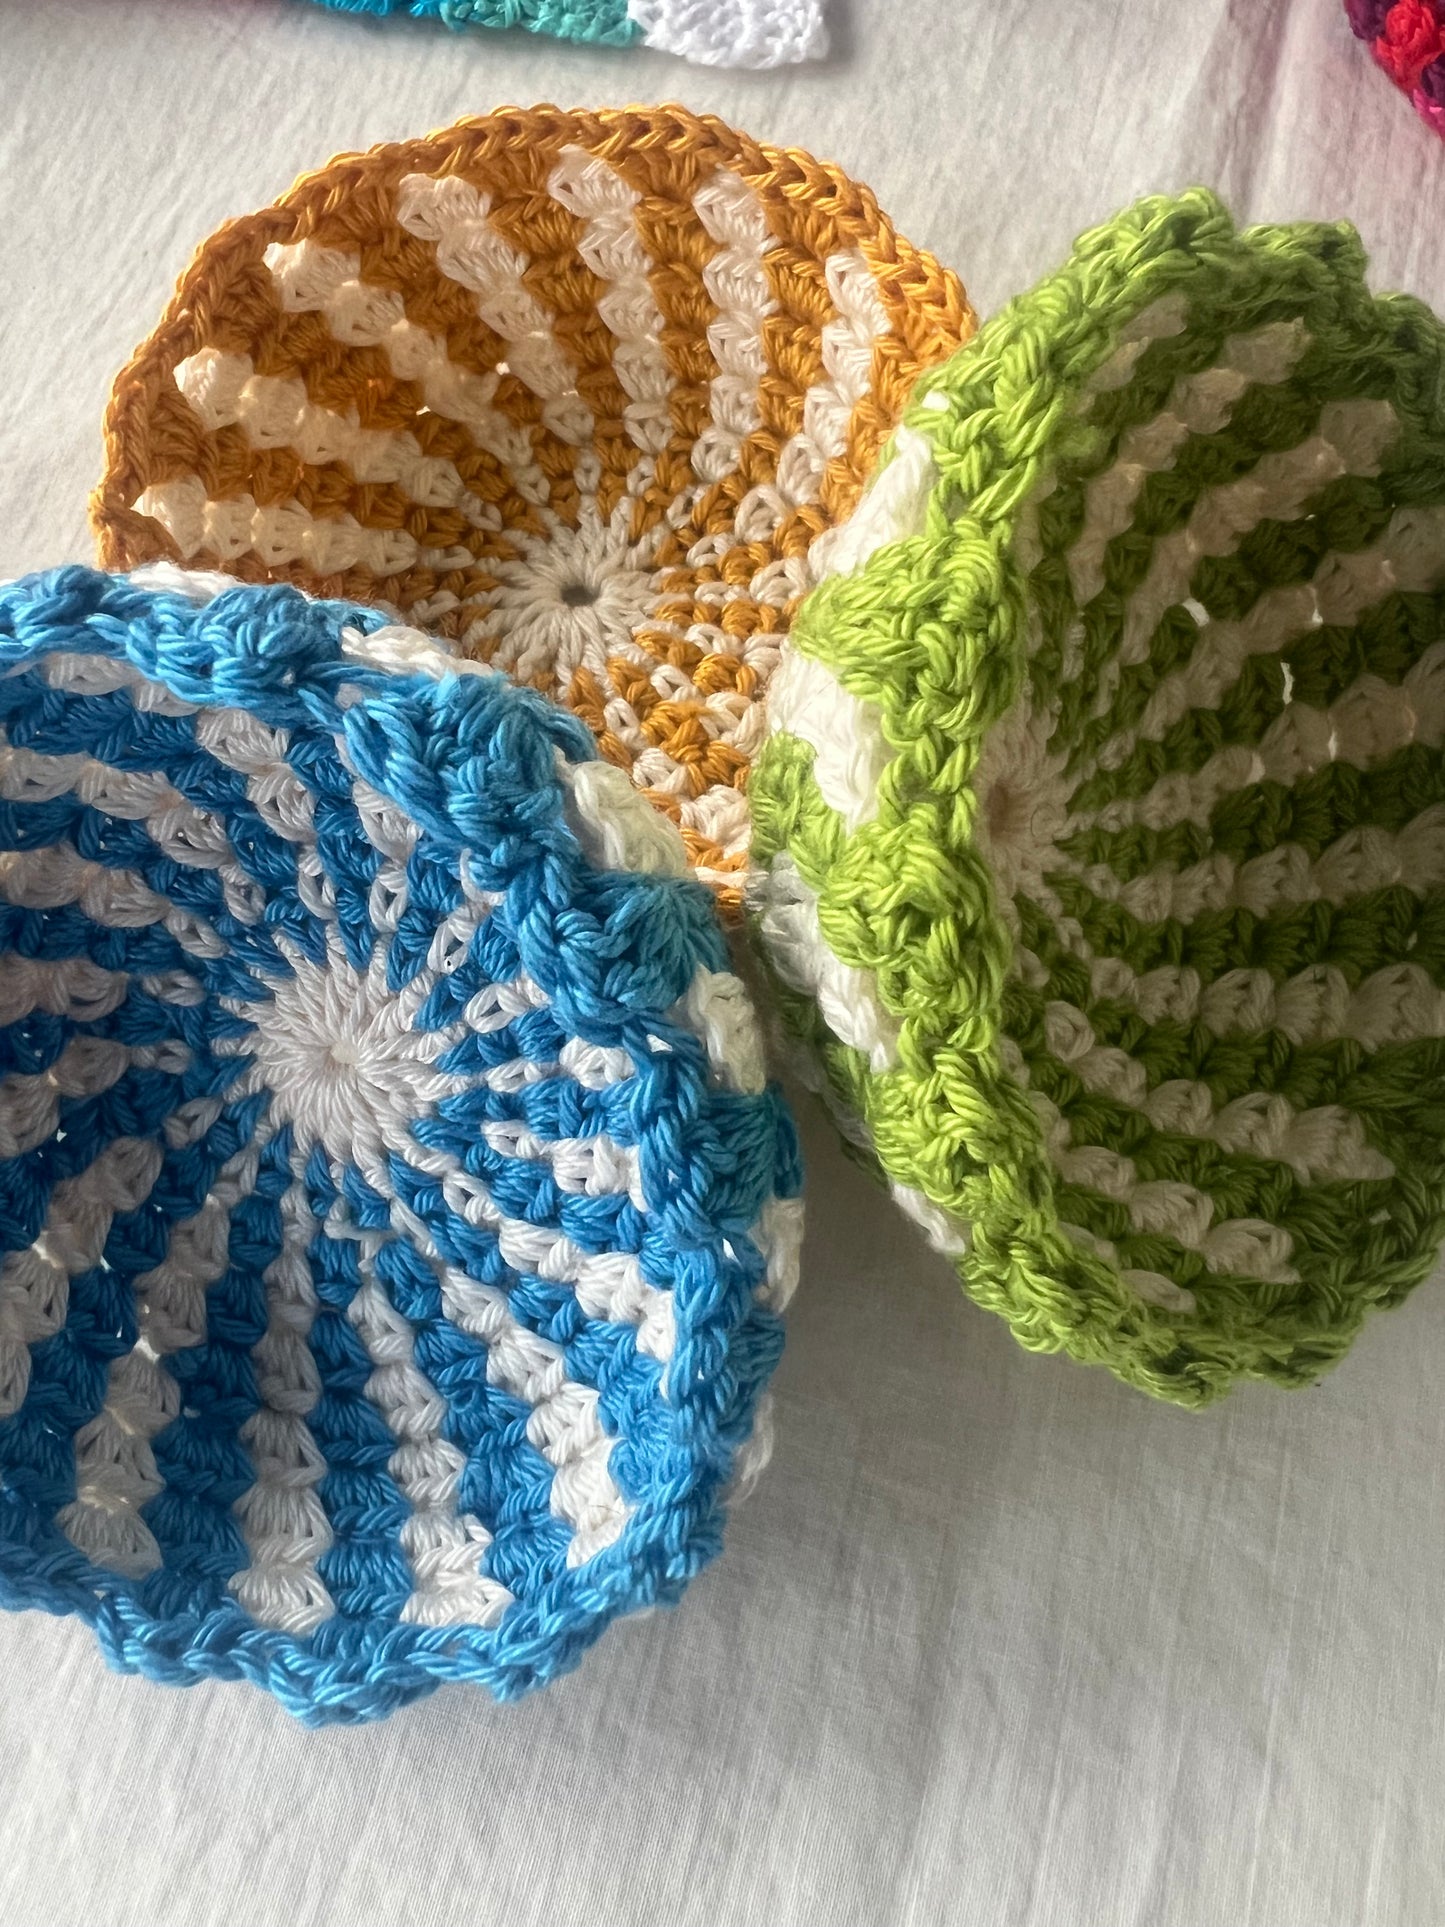 Classy and handmade. Decorative crochet bowls.